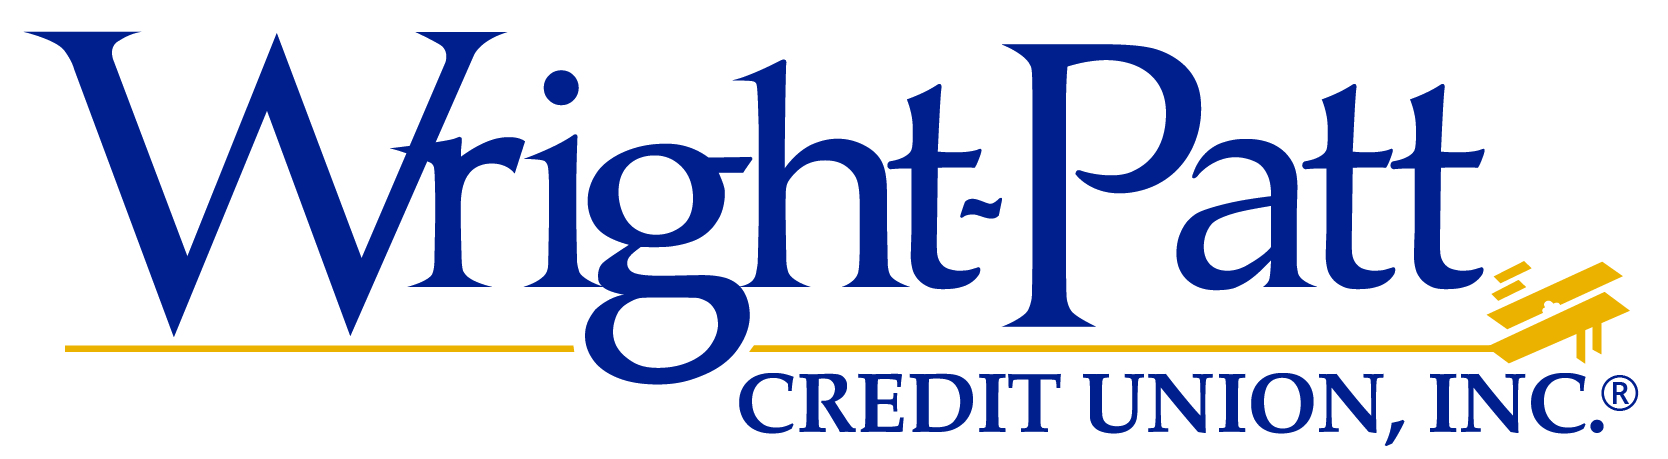 wright patt credit union inc logo